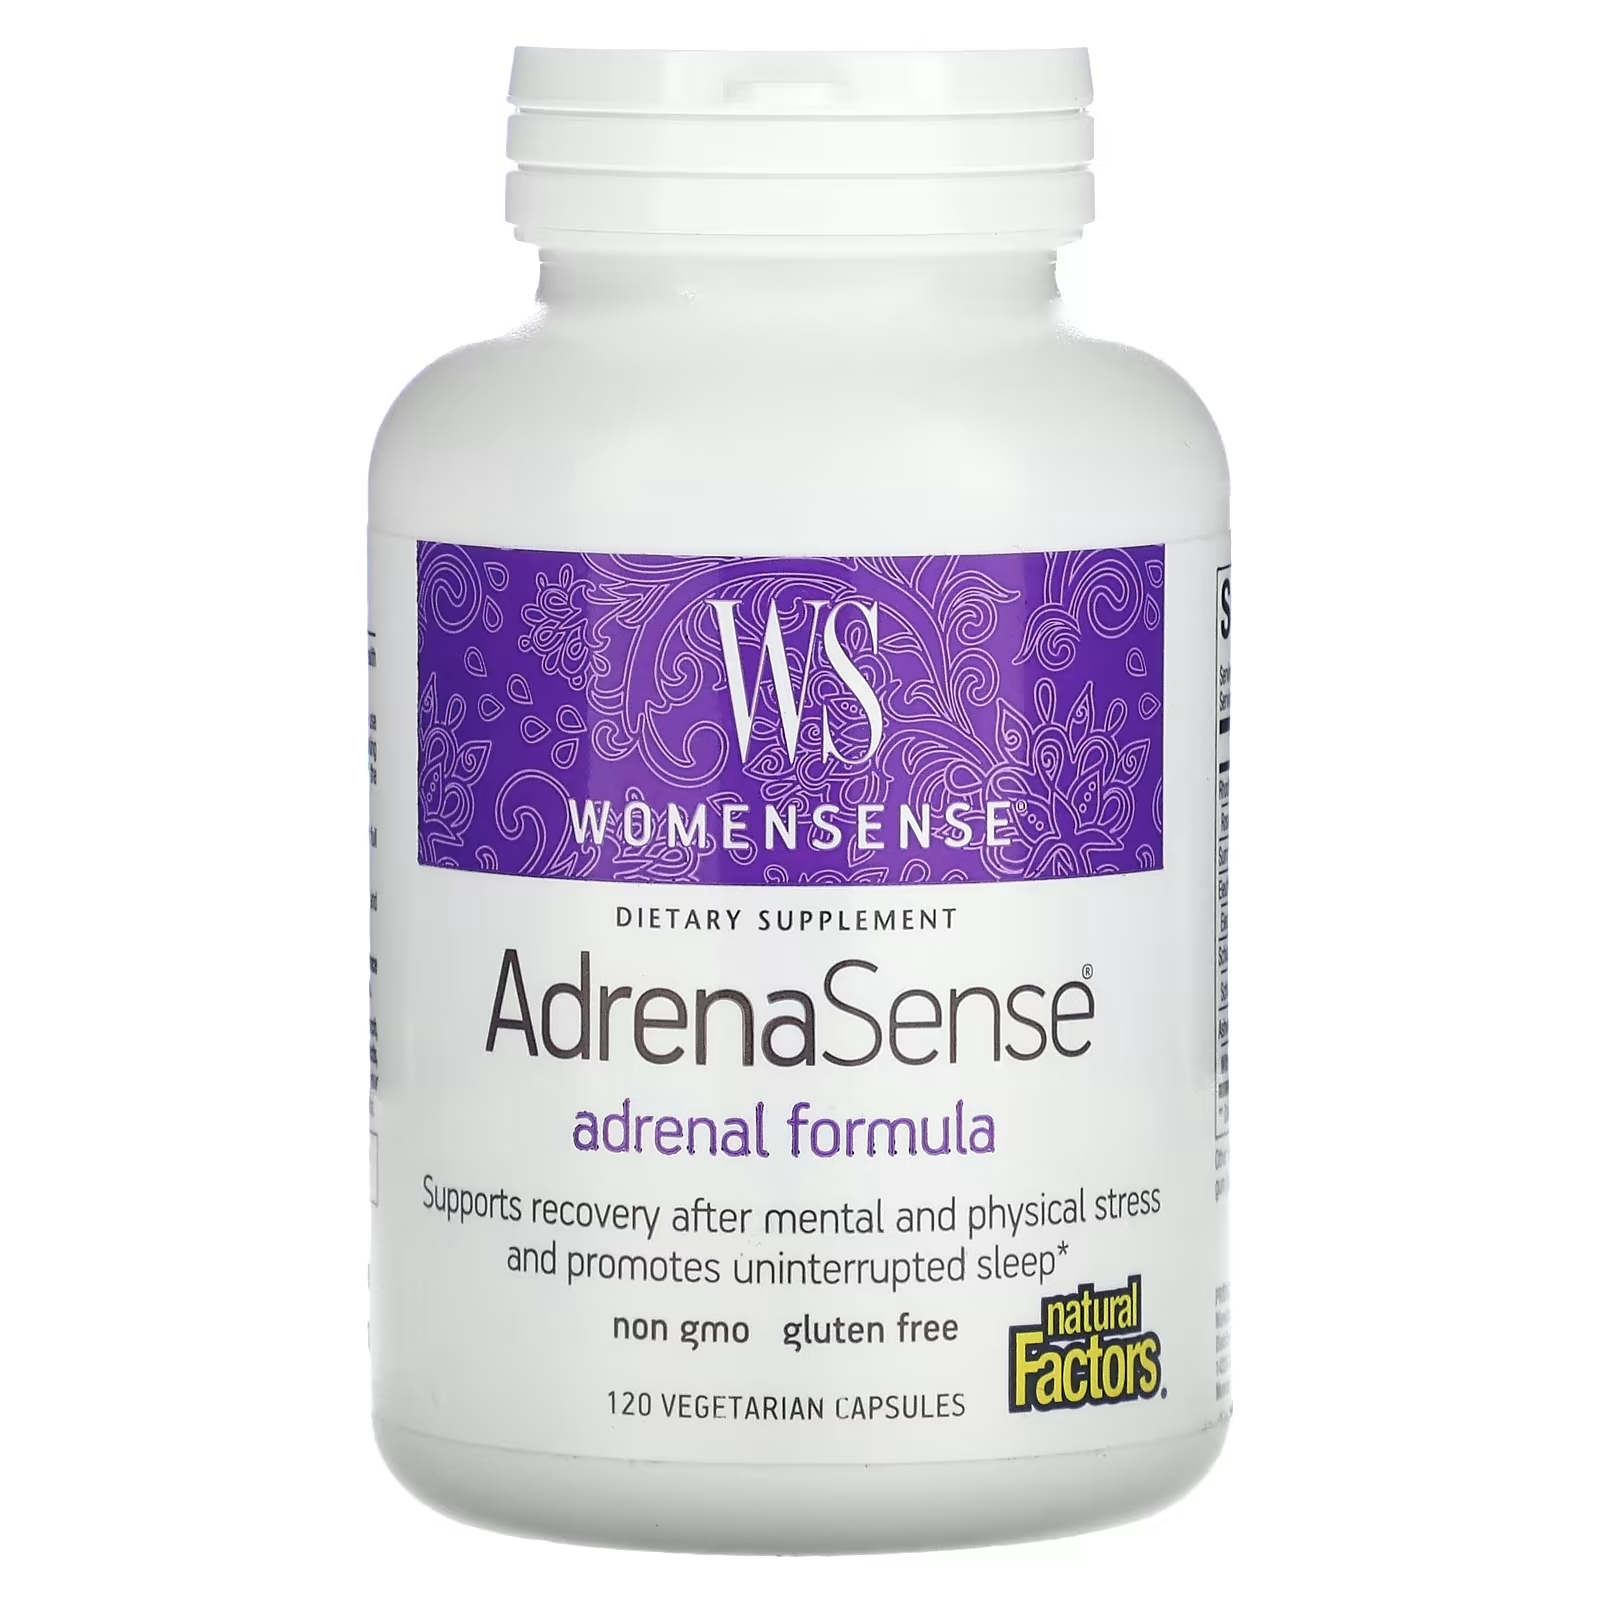 natural factors womensense adrenasense 60 vegetarian capsules Формула для Надпочечников Natural Factors WomenSense AdrenaSense, 120 вегетарианских капсул